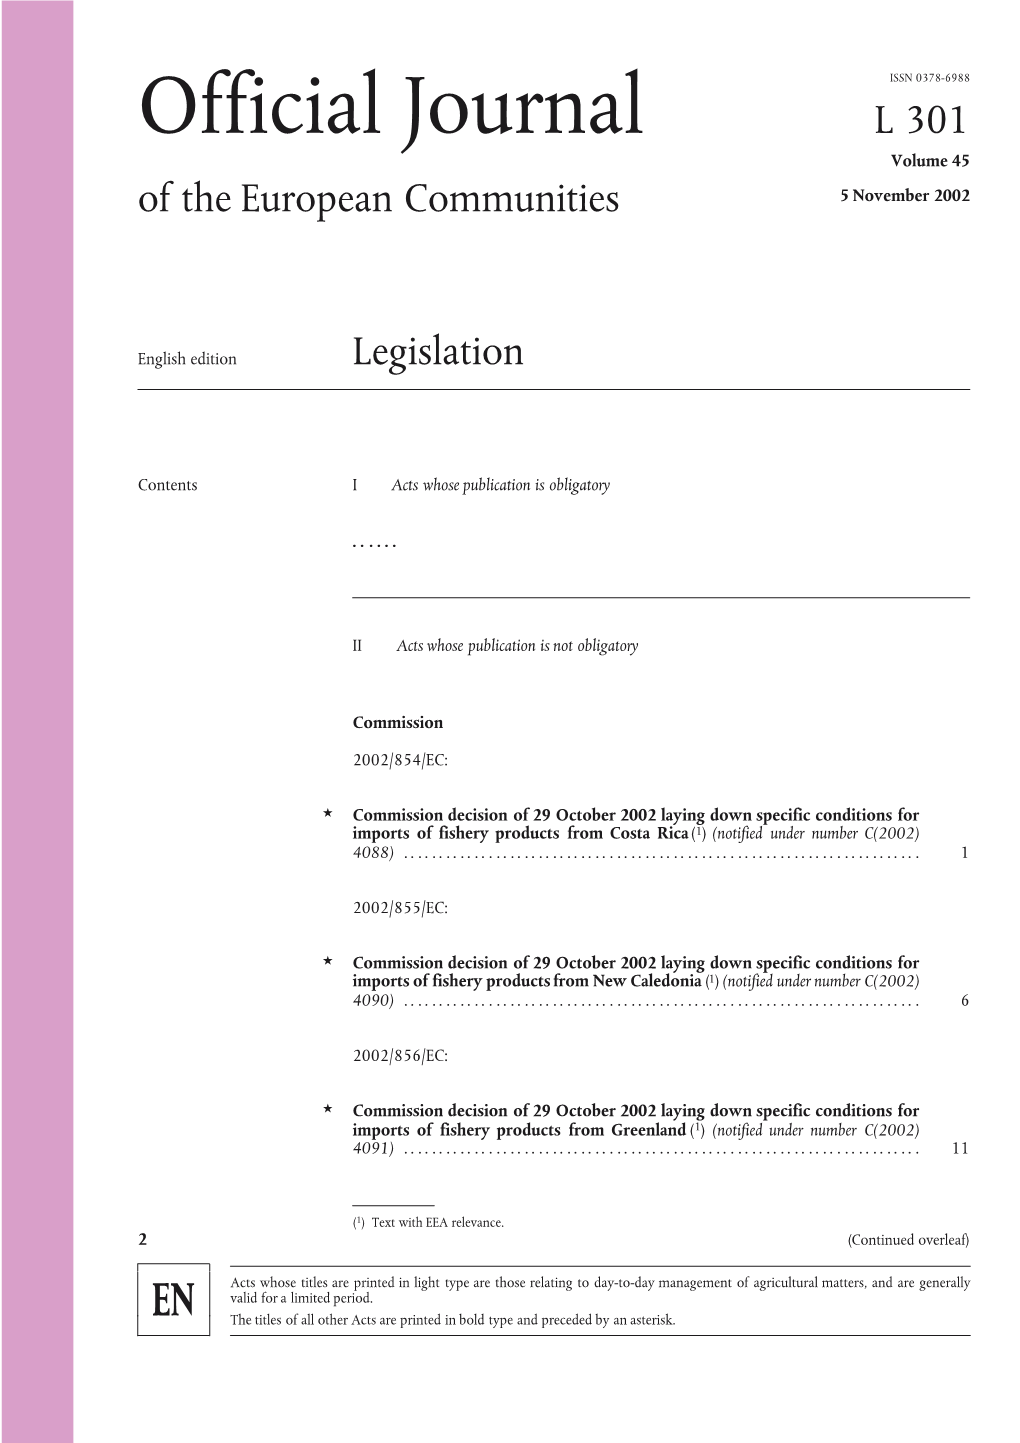 Official Journal L 301 Volume 45 of the European Communities 5 November 2002